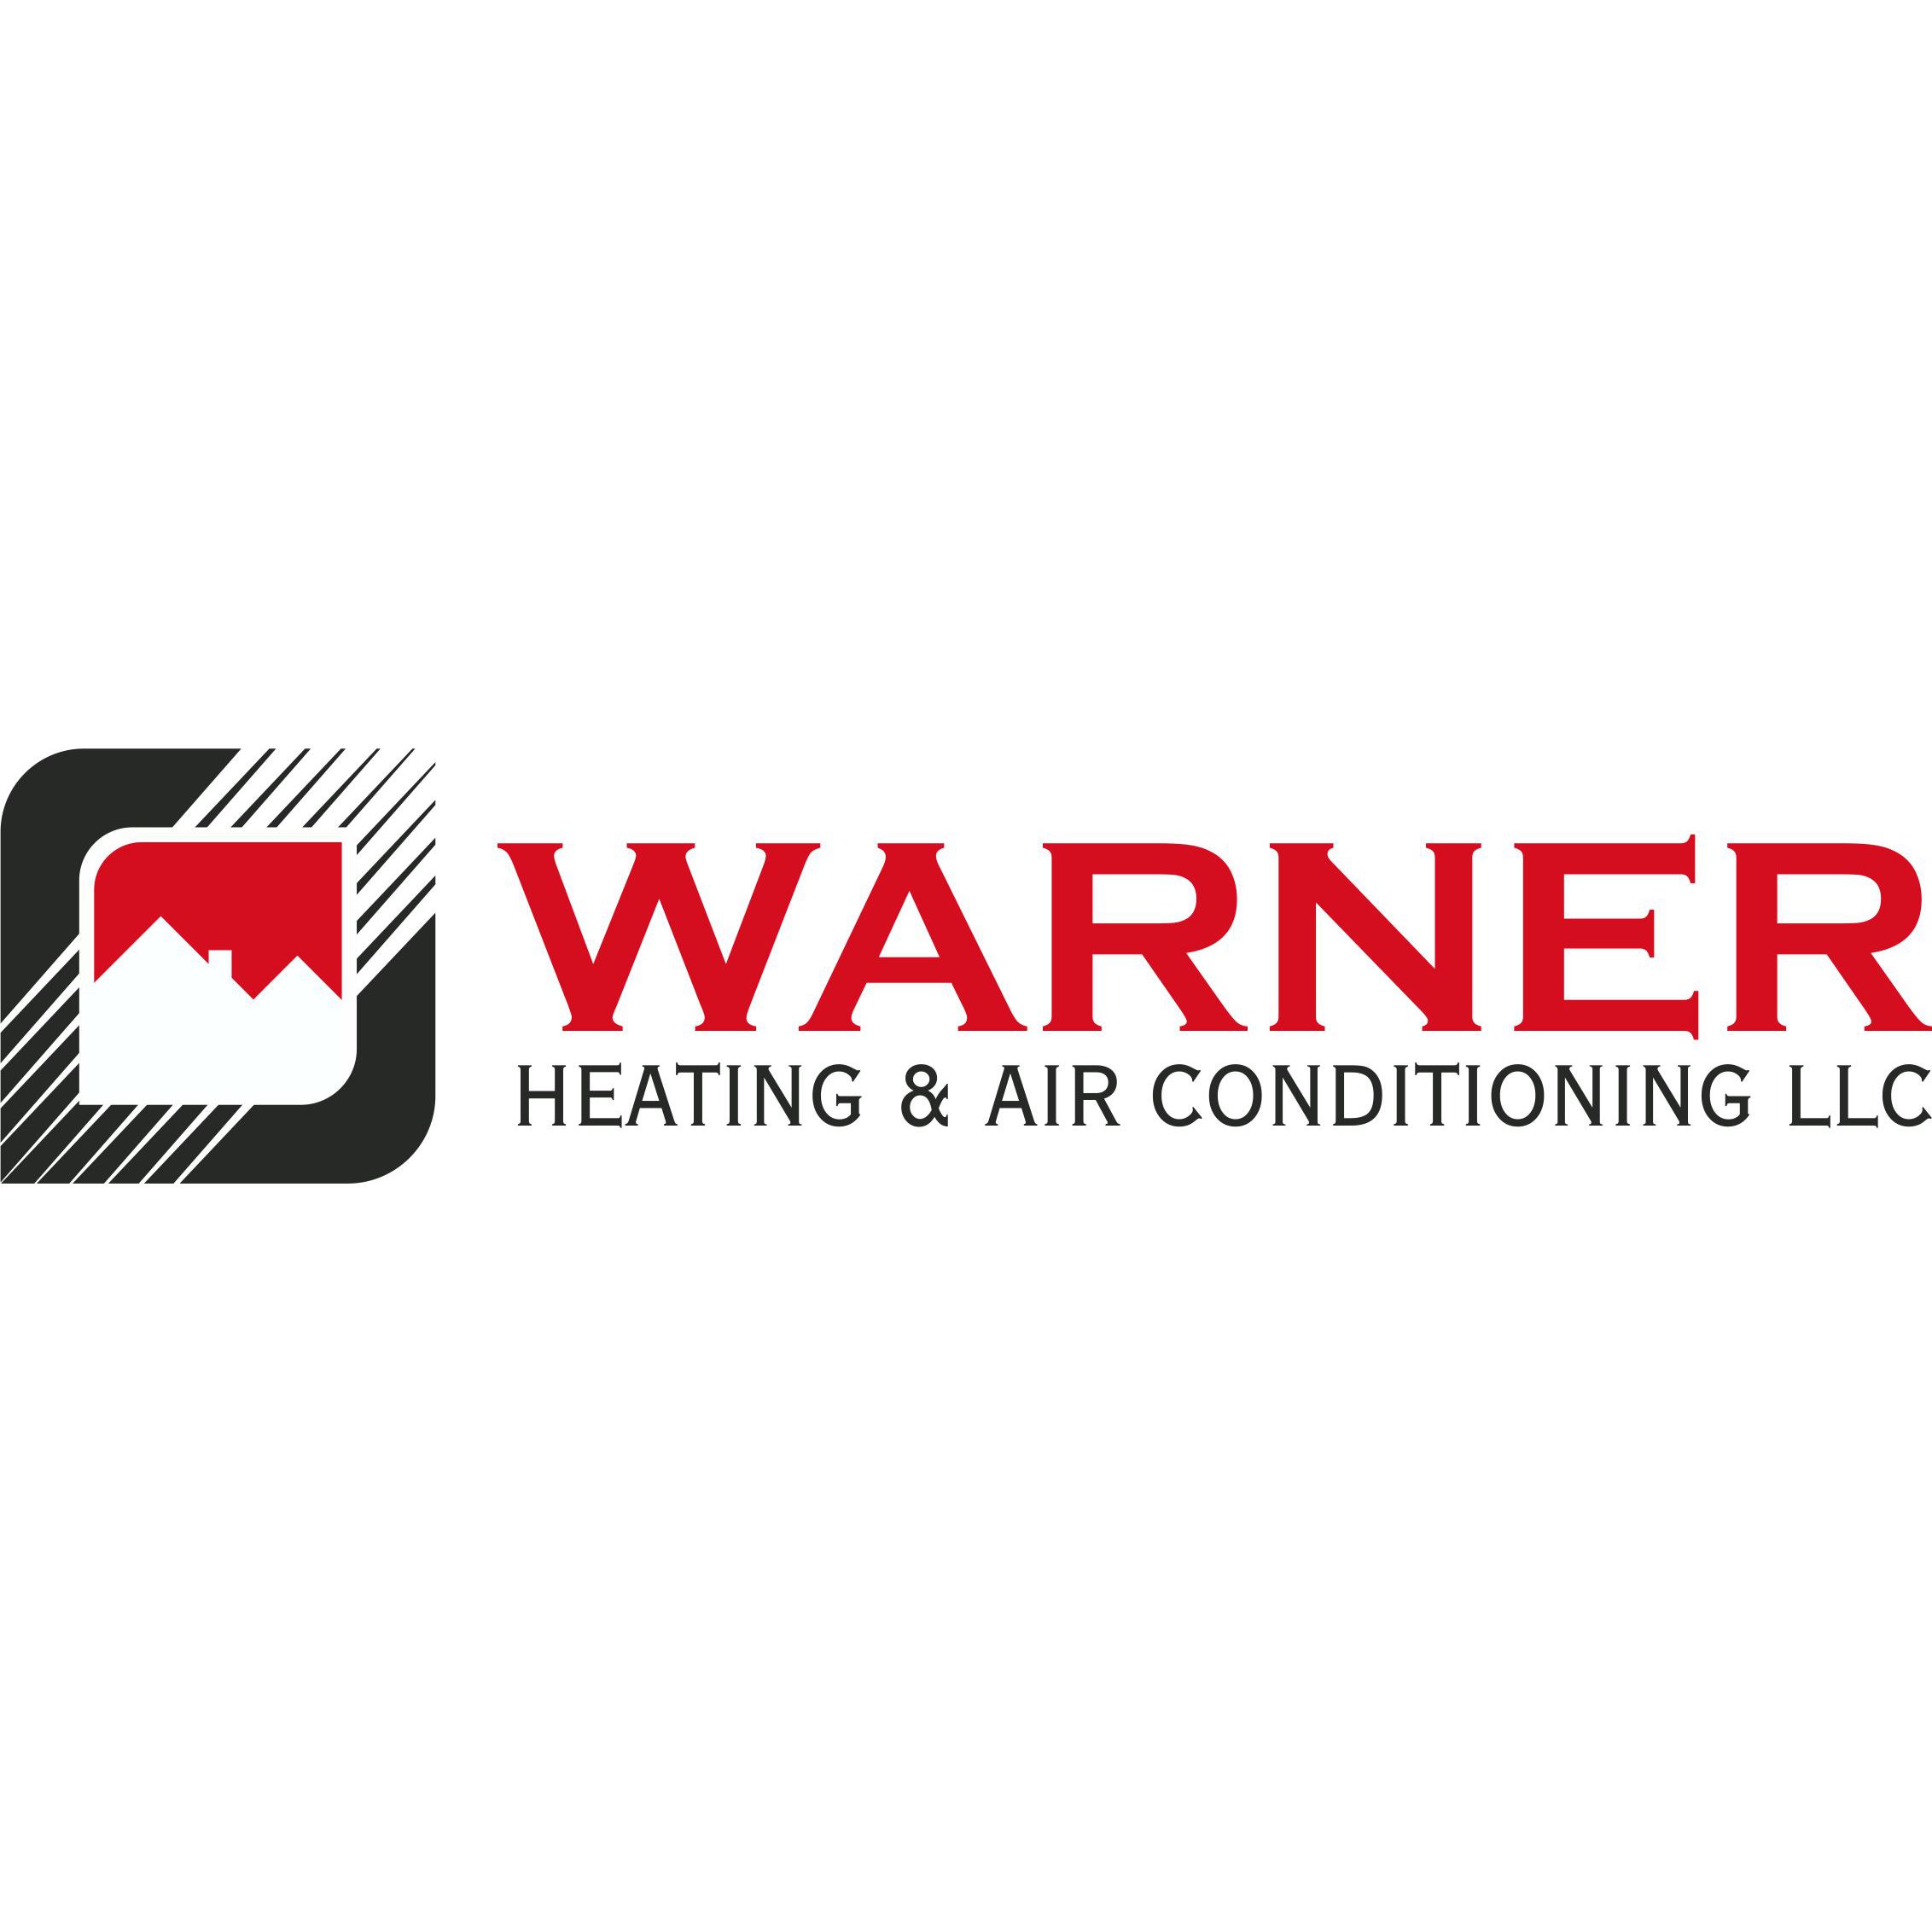 Warner Heating & Air Conditioning - Riverton, UT - (801)254-6433 | ShowMeLocal.com